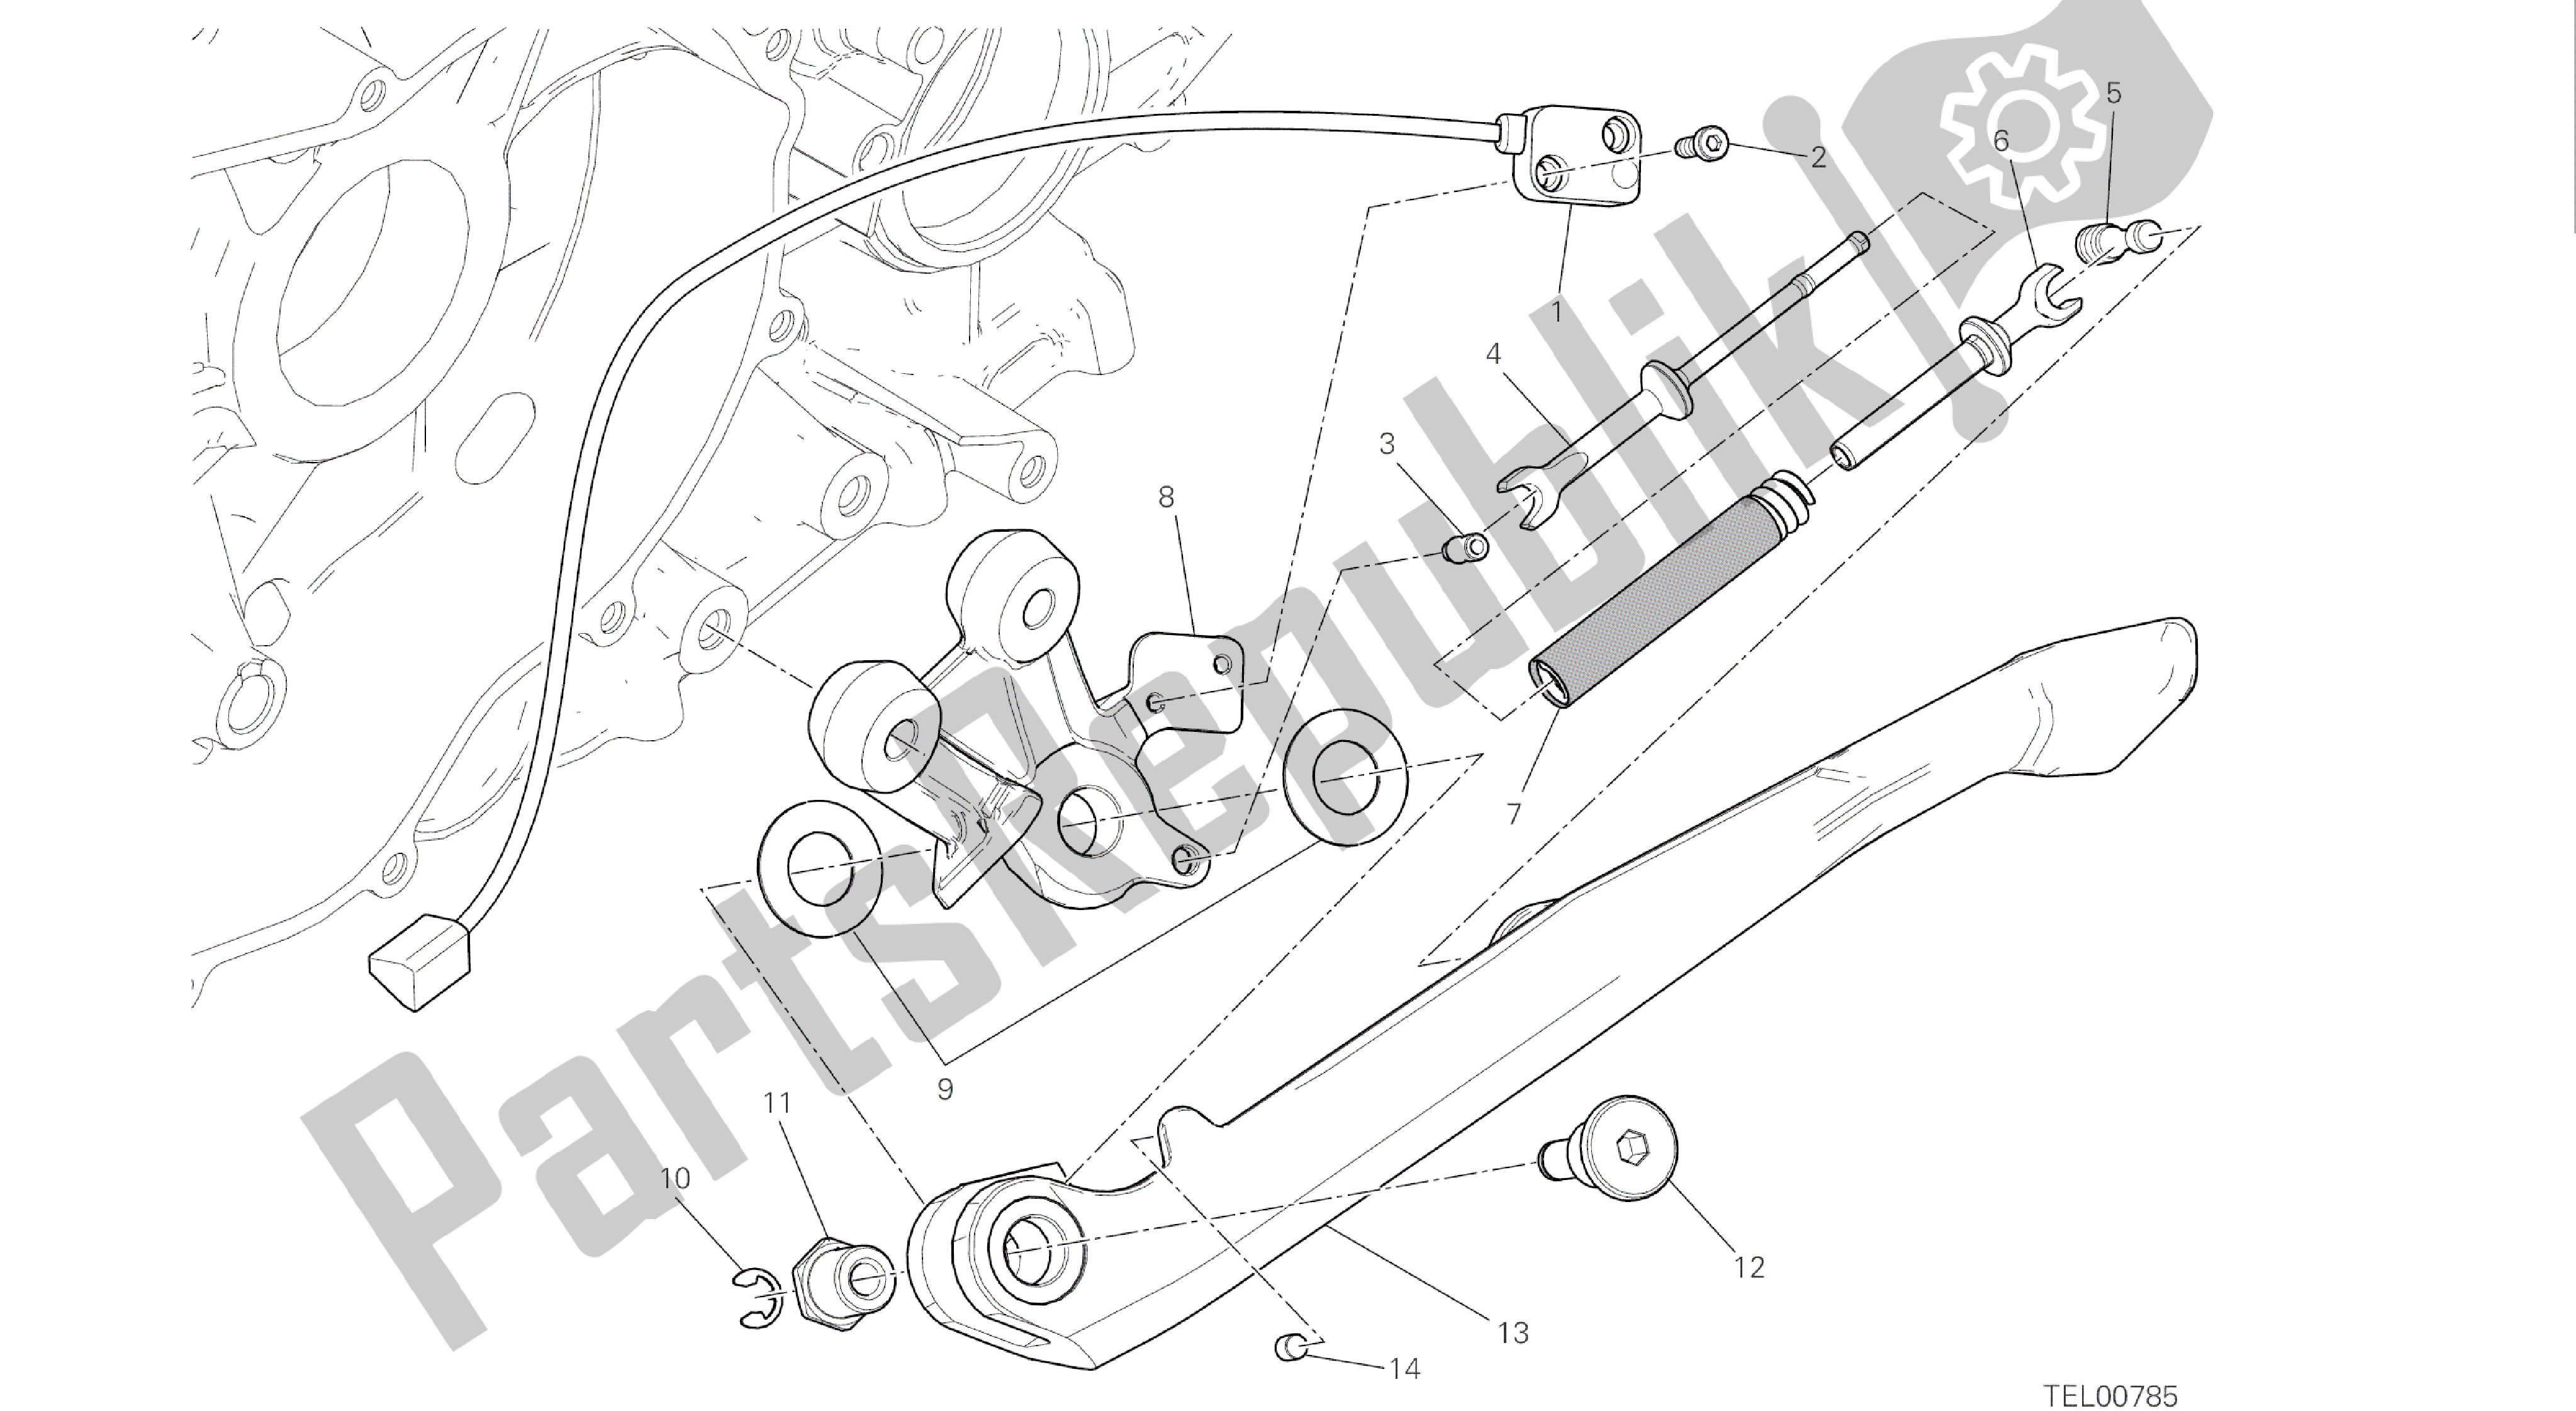 Alle onderdelen voor de Tekening 22a - Standaard [mod: 1299s; Xst: Aus, Eur, Fra, Jap, Twn] Groepsframe van de Ducati Panigale S ABS 1299 2016